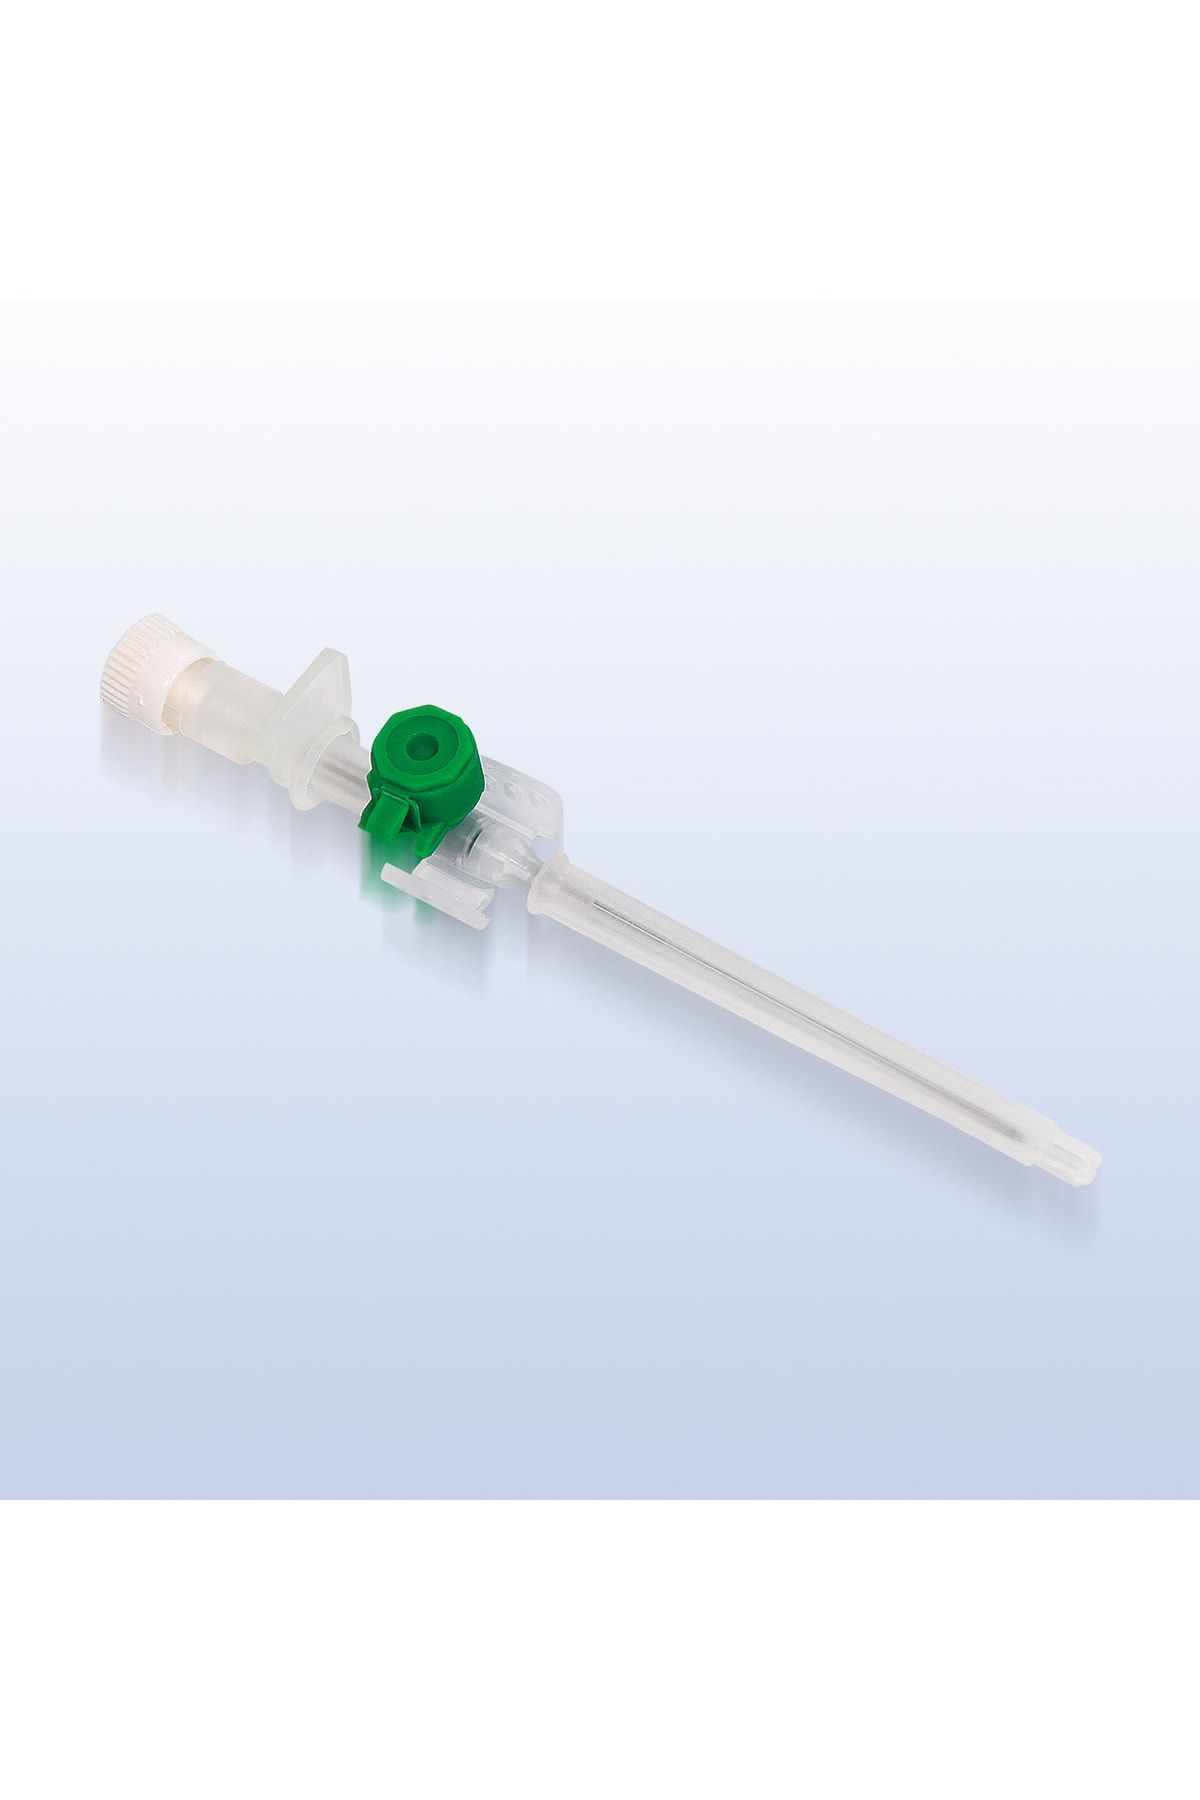 Ayset Steril Piercing Delim Iğnesi - 10 Adet 45mm Yeşil Brk0193